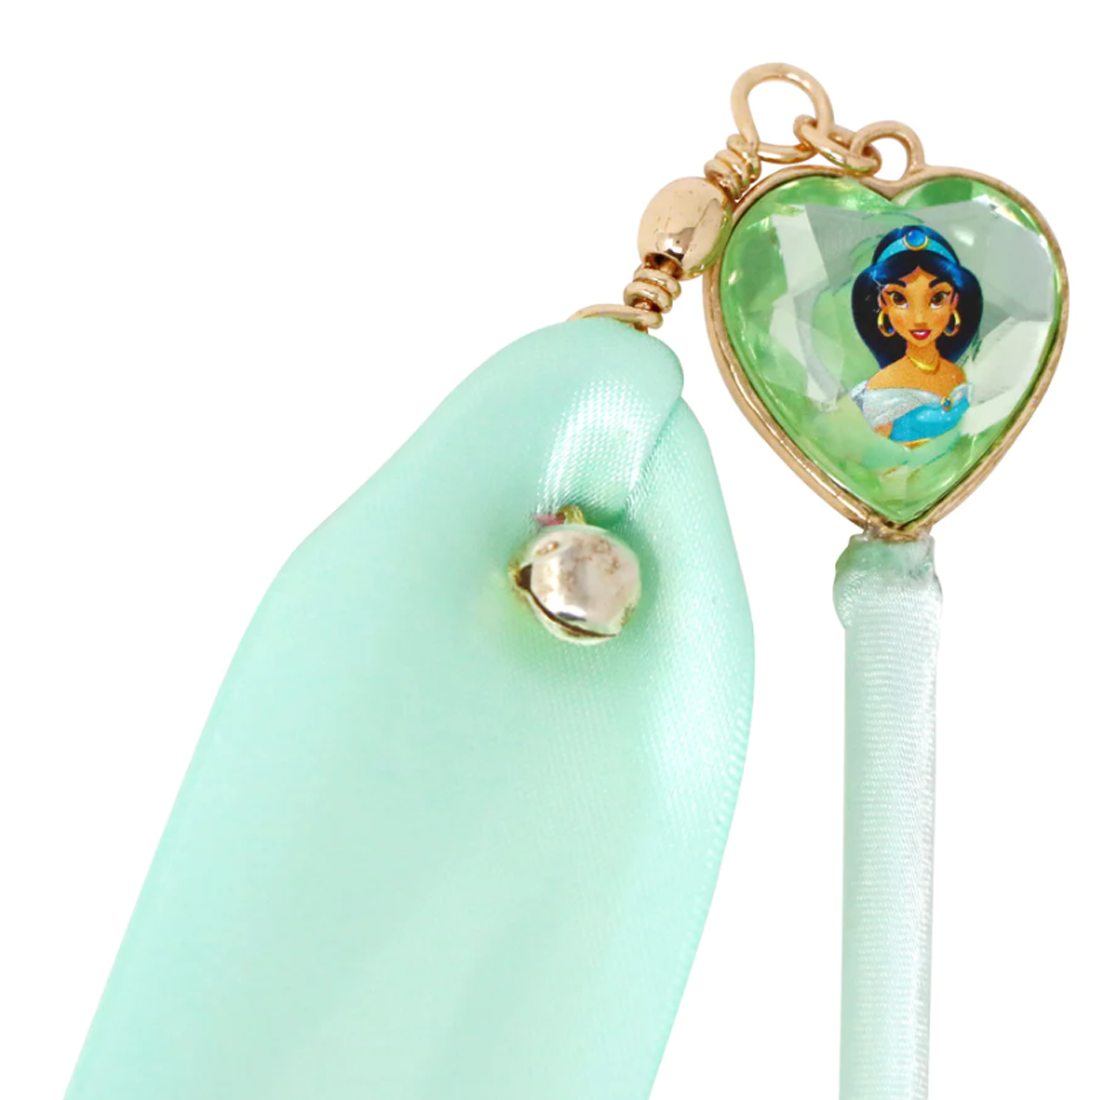 Disney Princess Jasmine Necklace amp Earrings Play Set NWT Disney  Exclusive  eBay